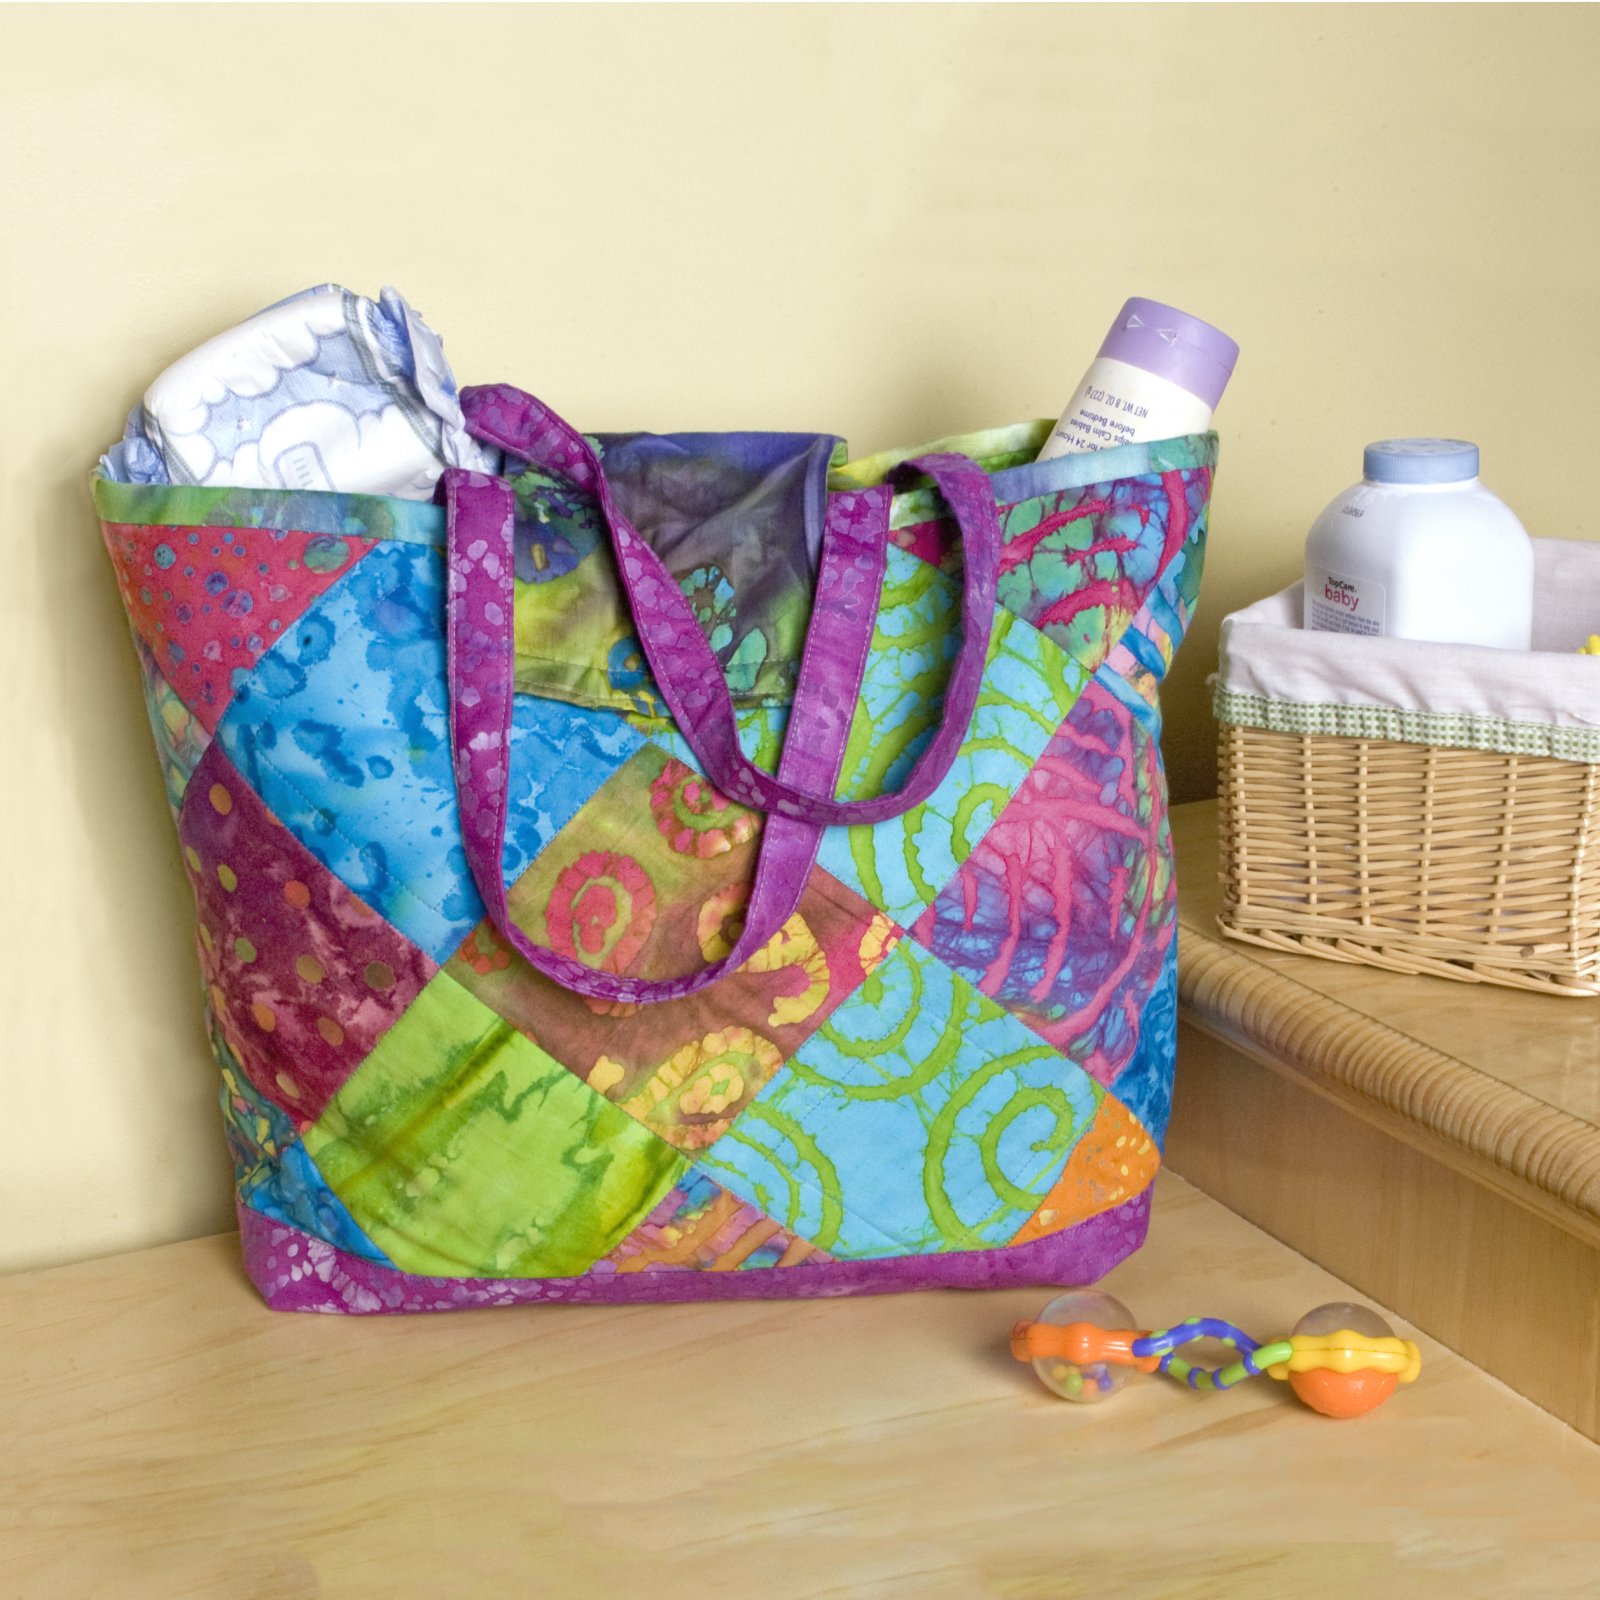 Batik Sewing Pattern For A Nappy / Diaper Bag